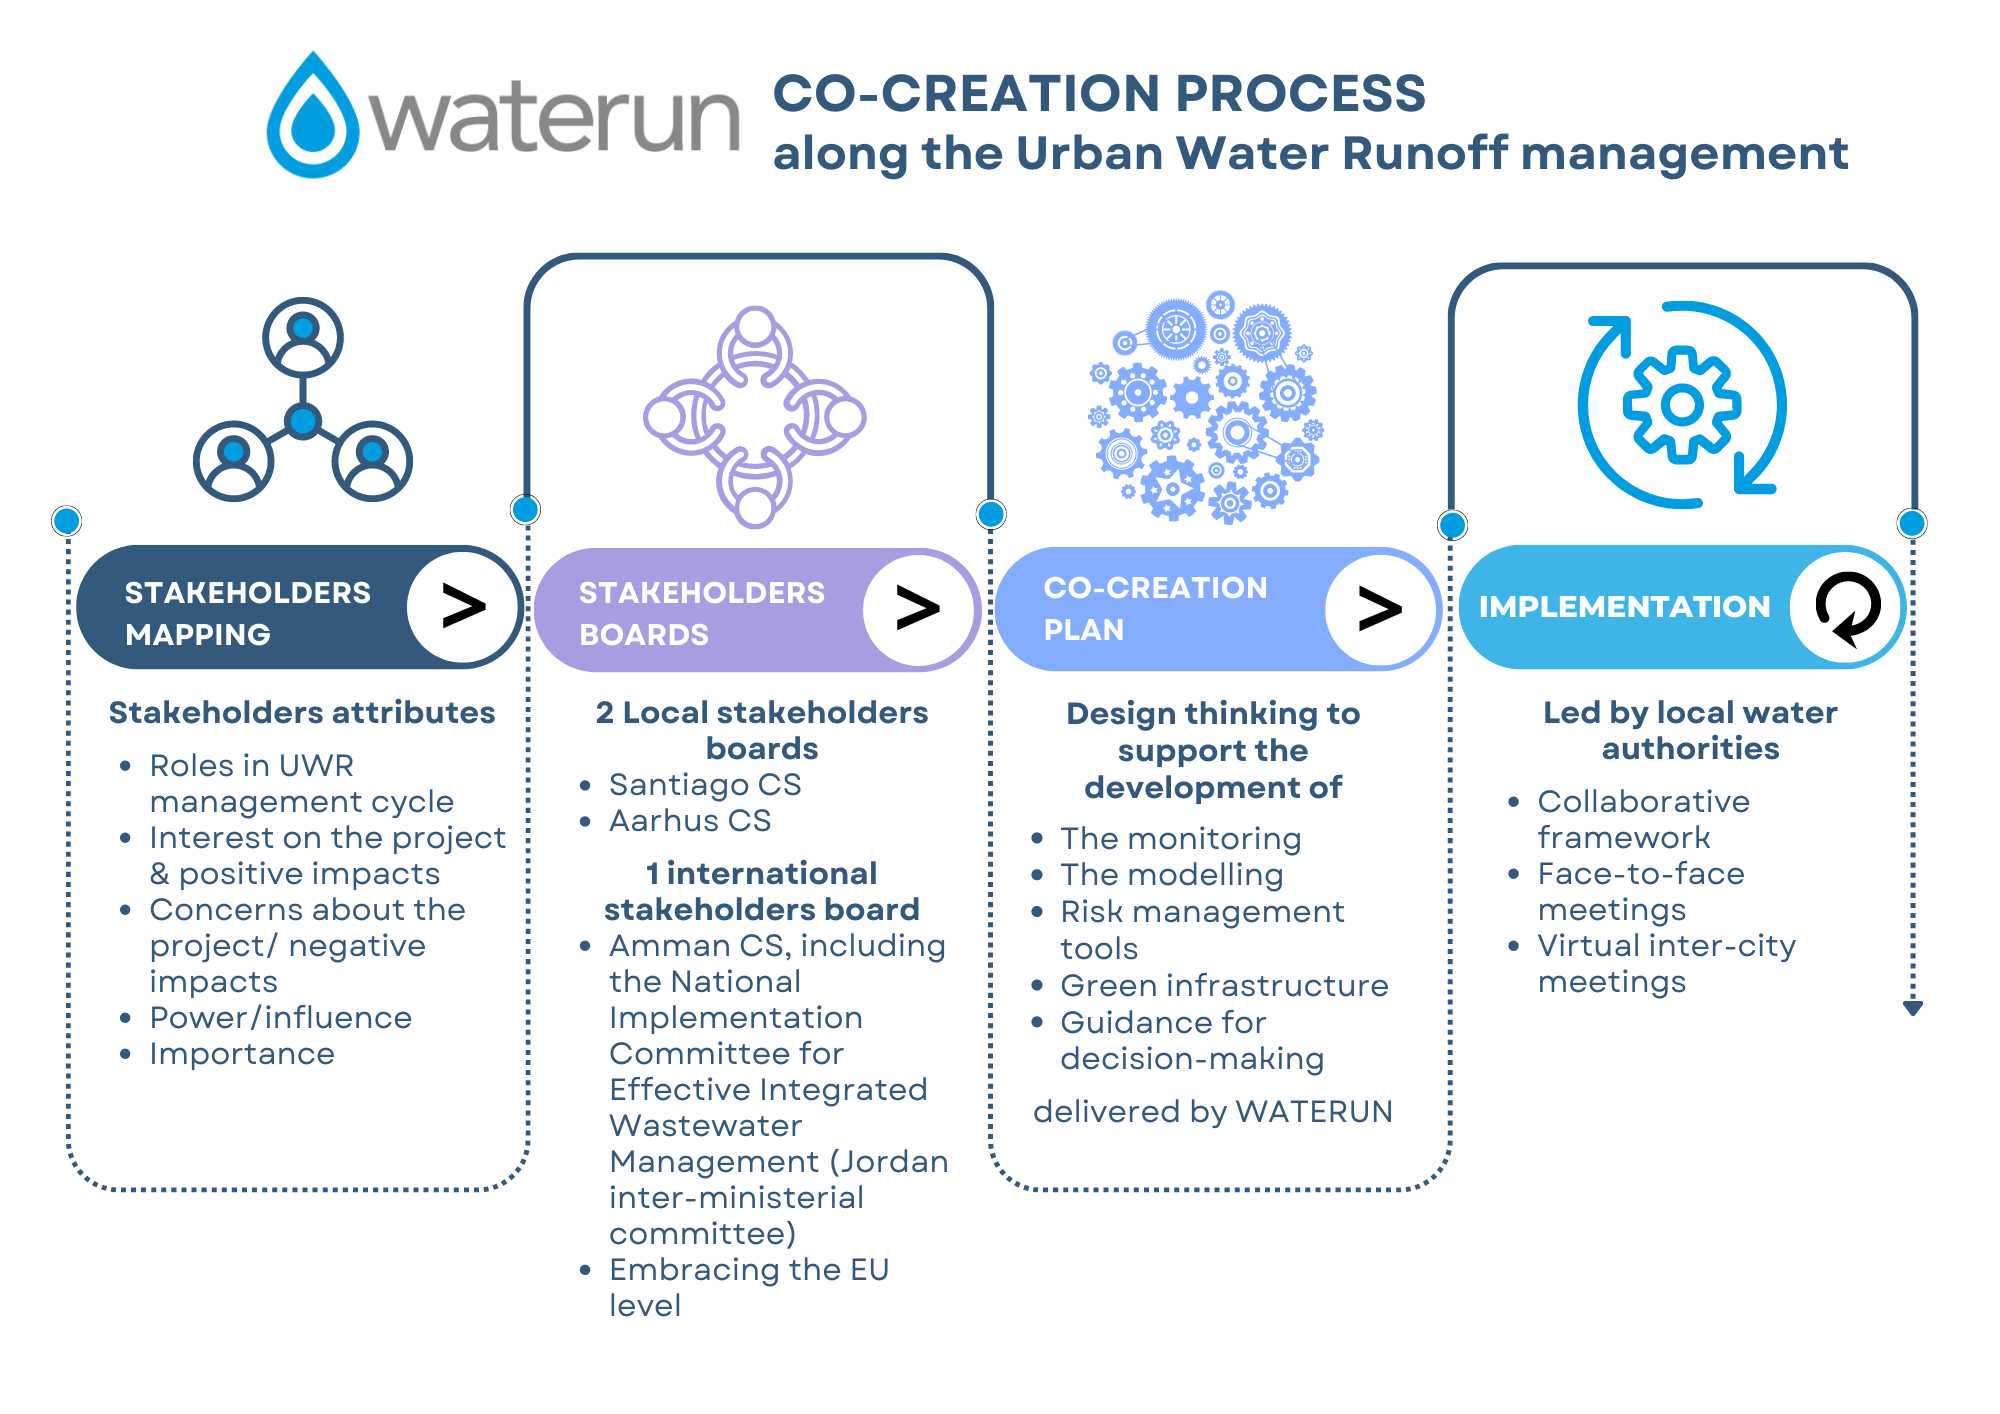 Waterun co-creation process